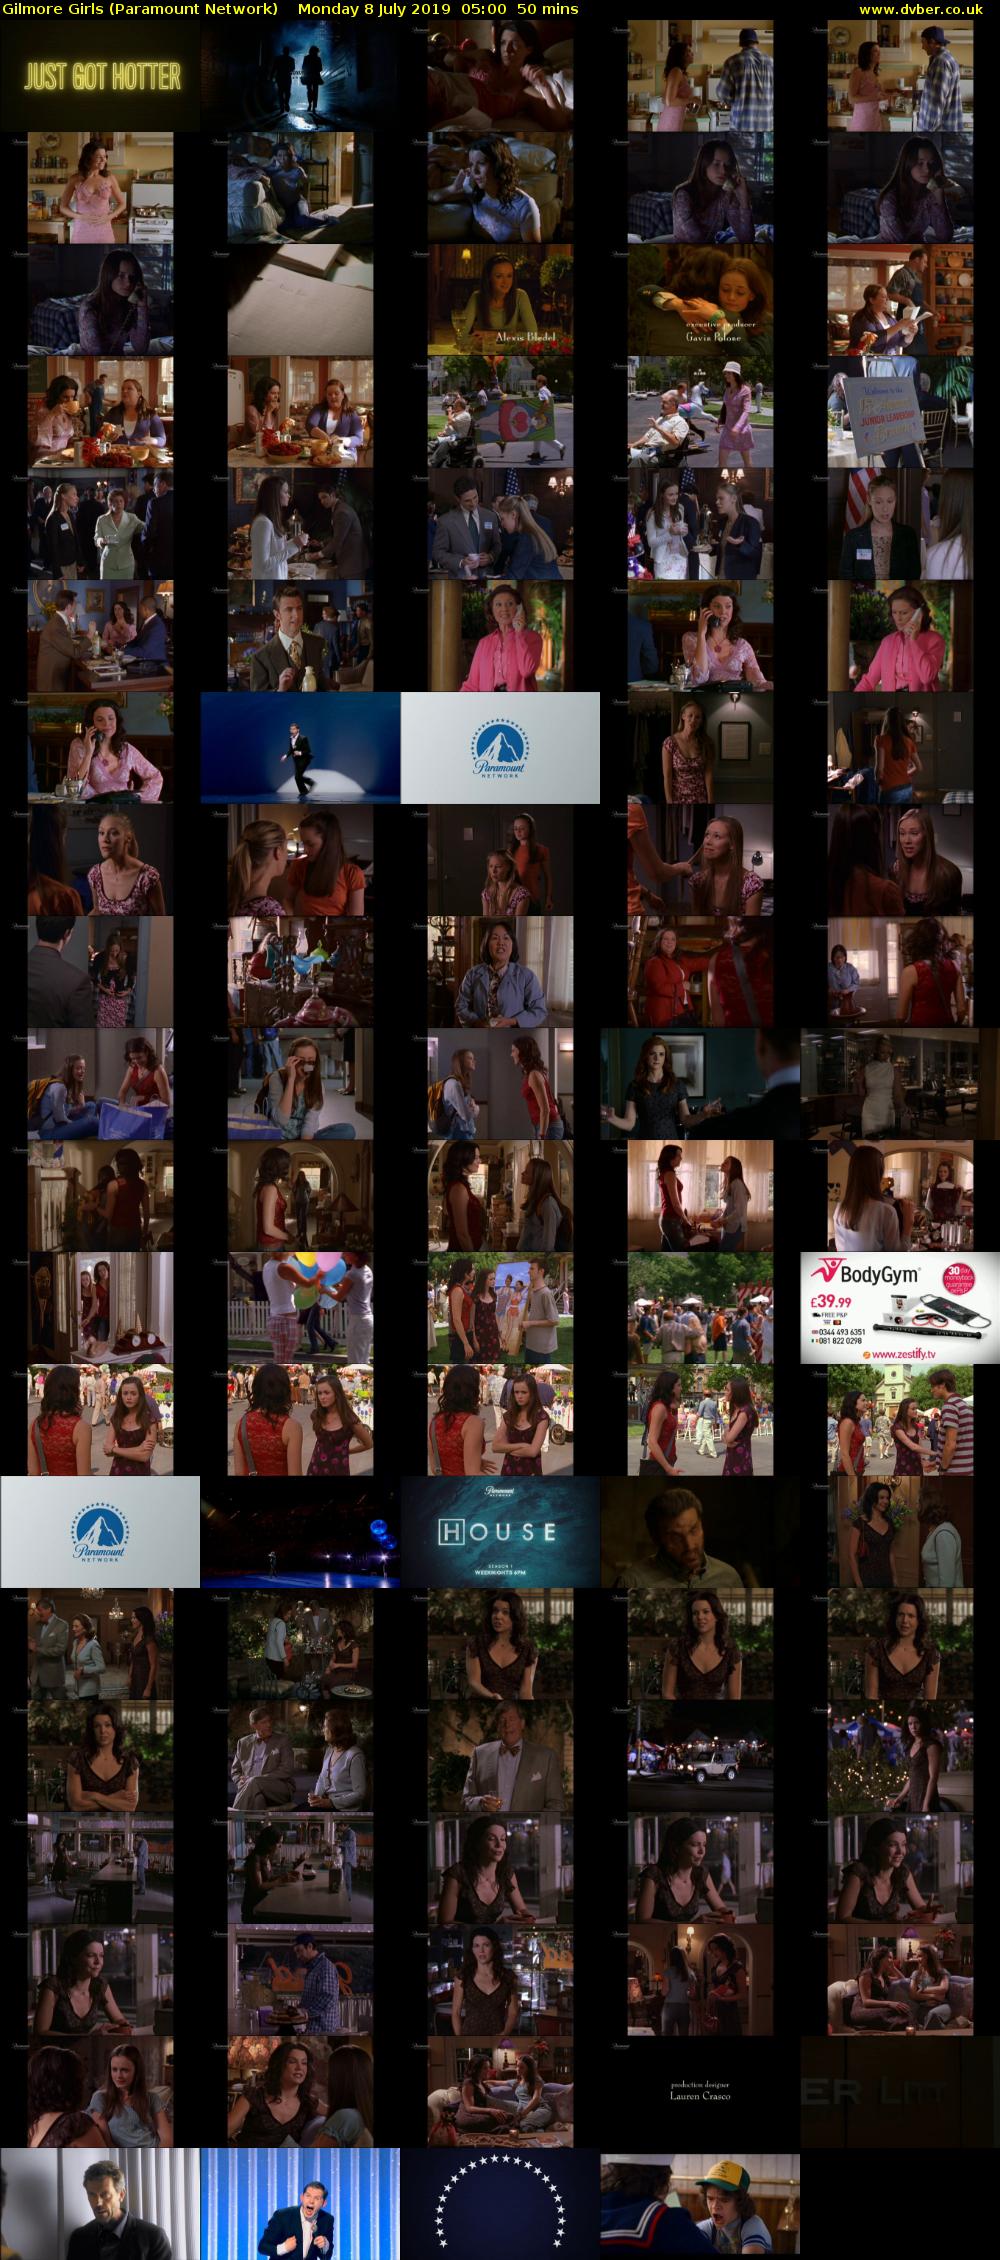 Gilmore Girls (Paramount Network) Monday 8 July 2019 05:00 - 05:50